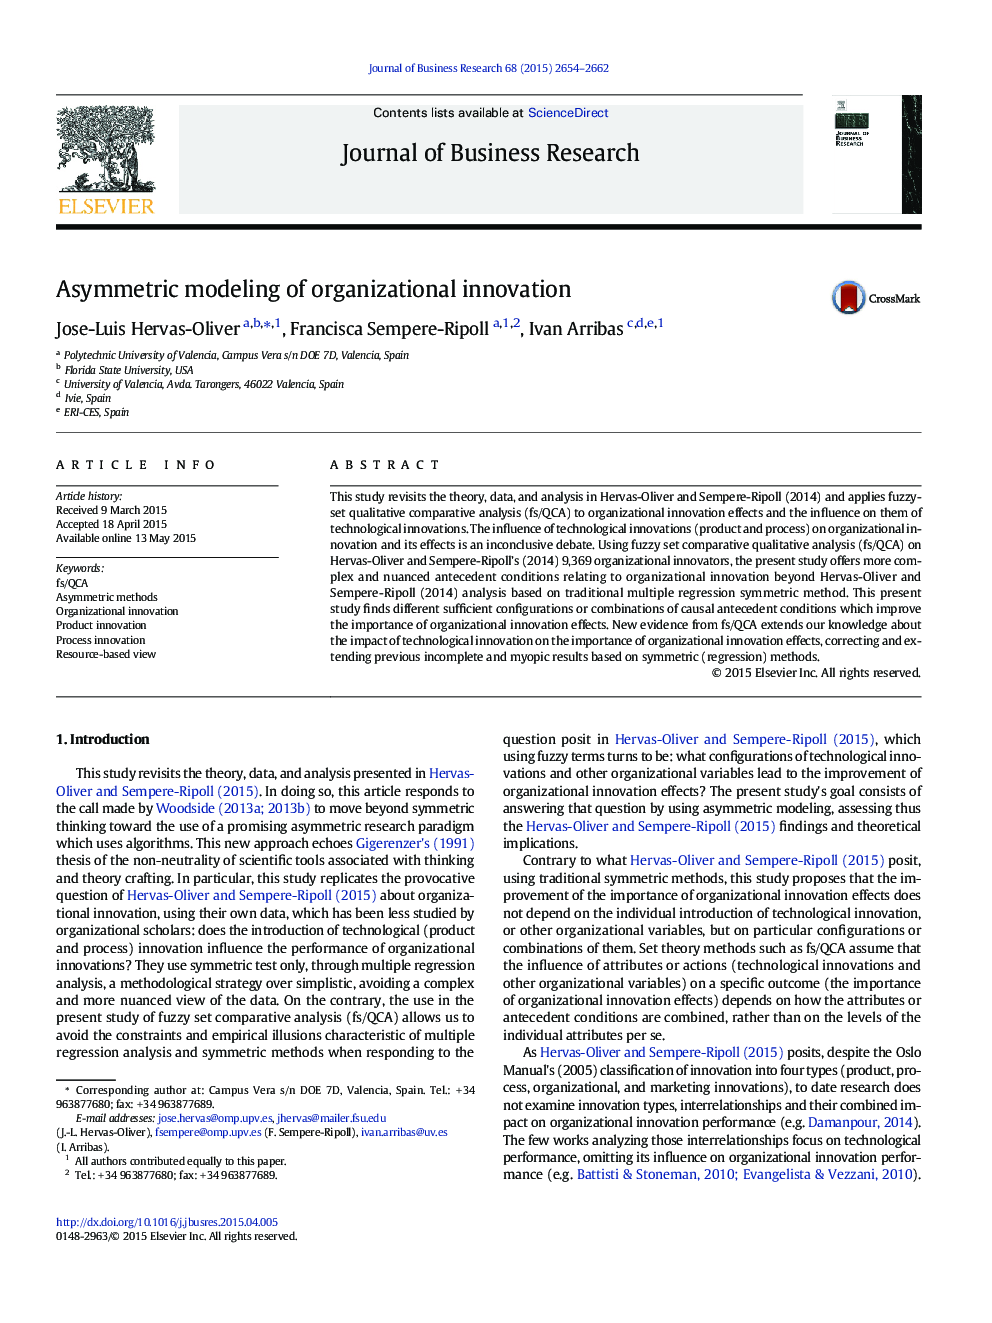 Asymmetric modeling of organizational innovation